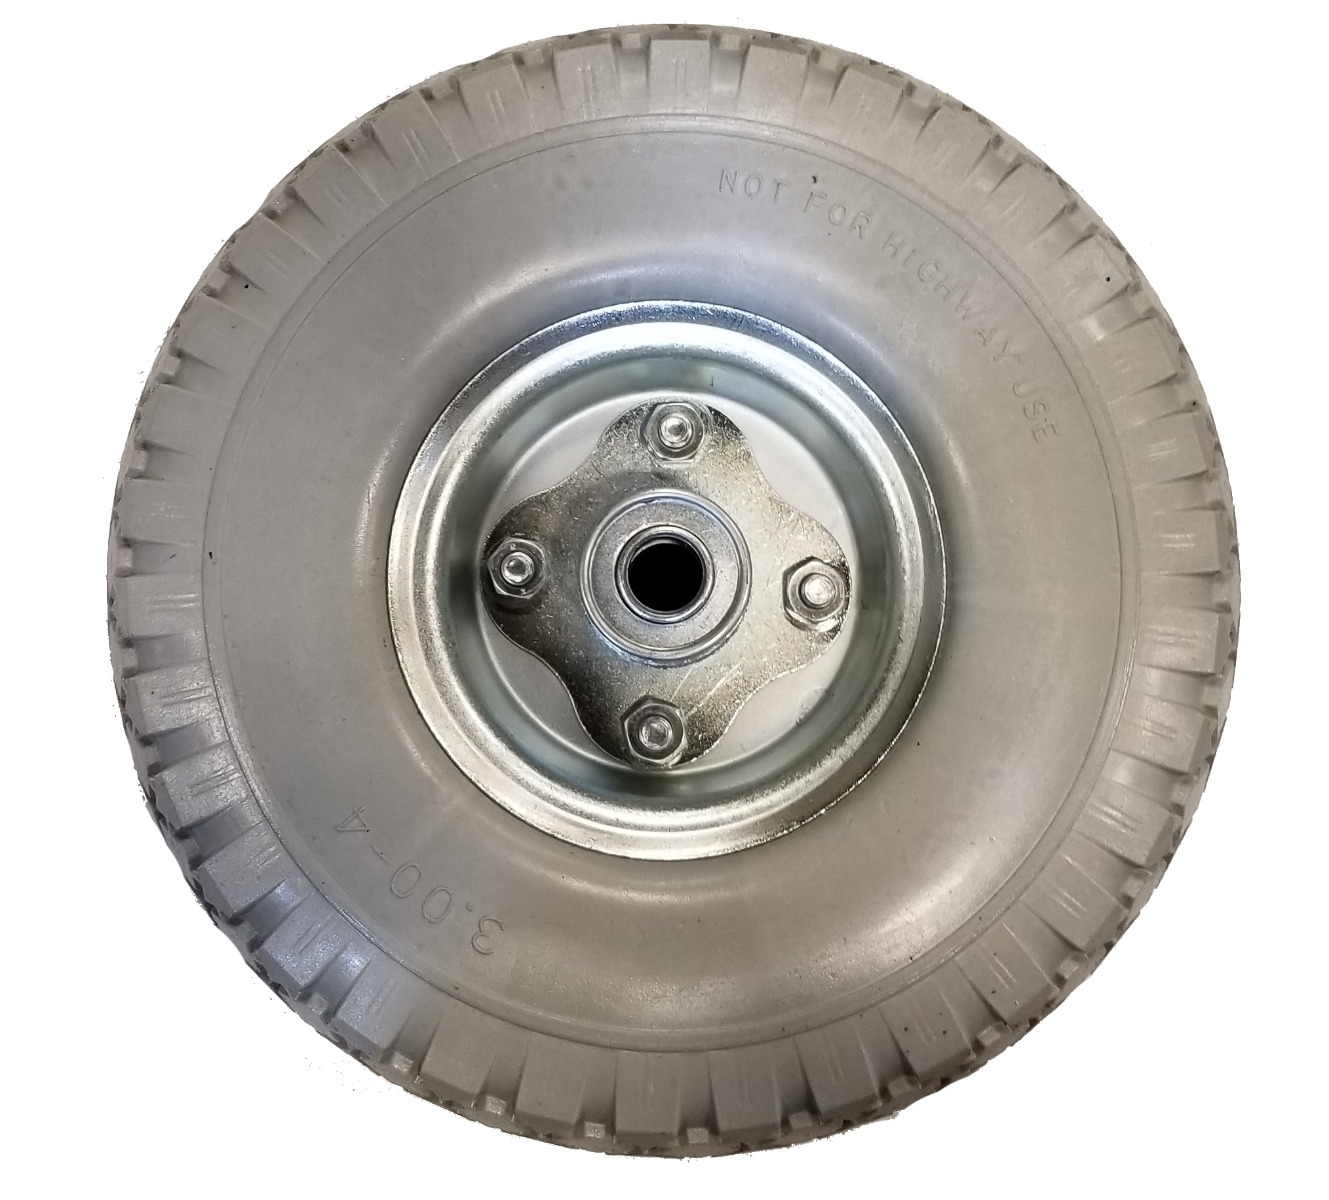 10″ Polyurethane Filled Non Flat Air Tire W/Rim – Hand Truck Wheel Replacement – Asst. Colors-8833